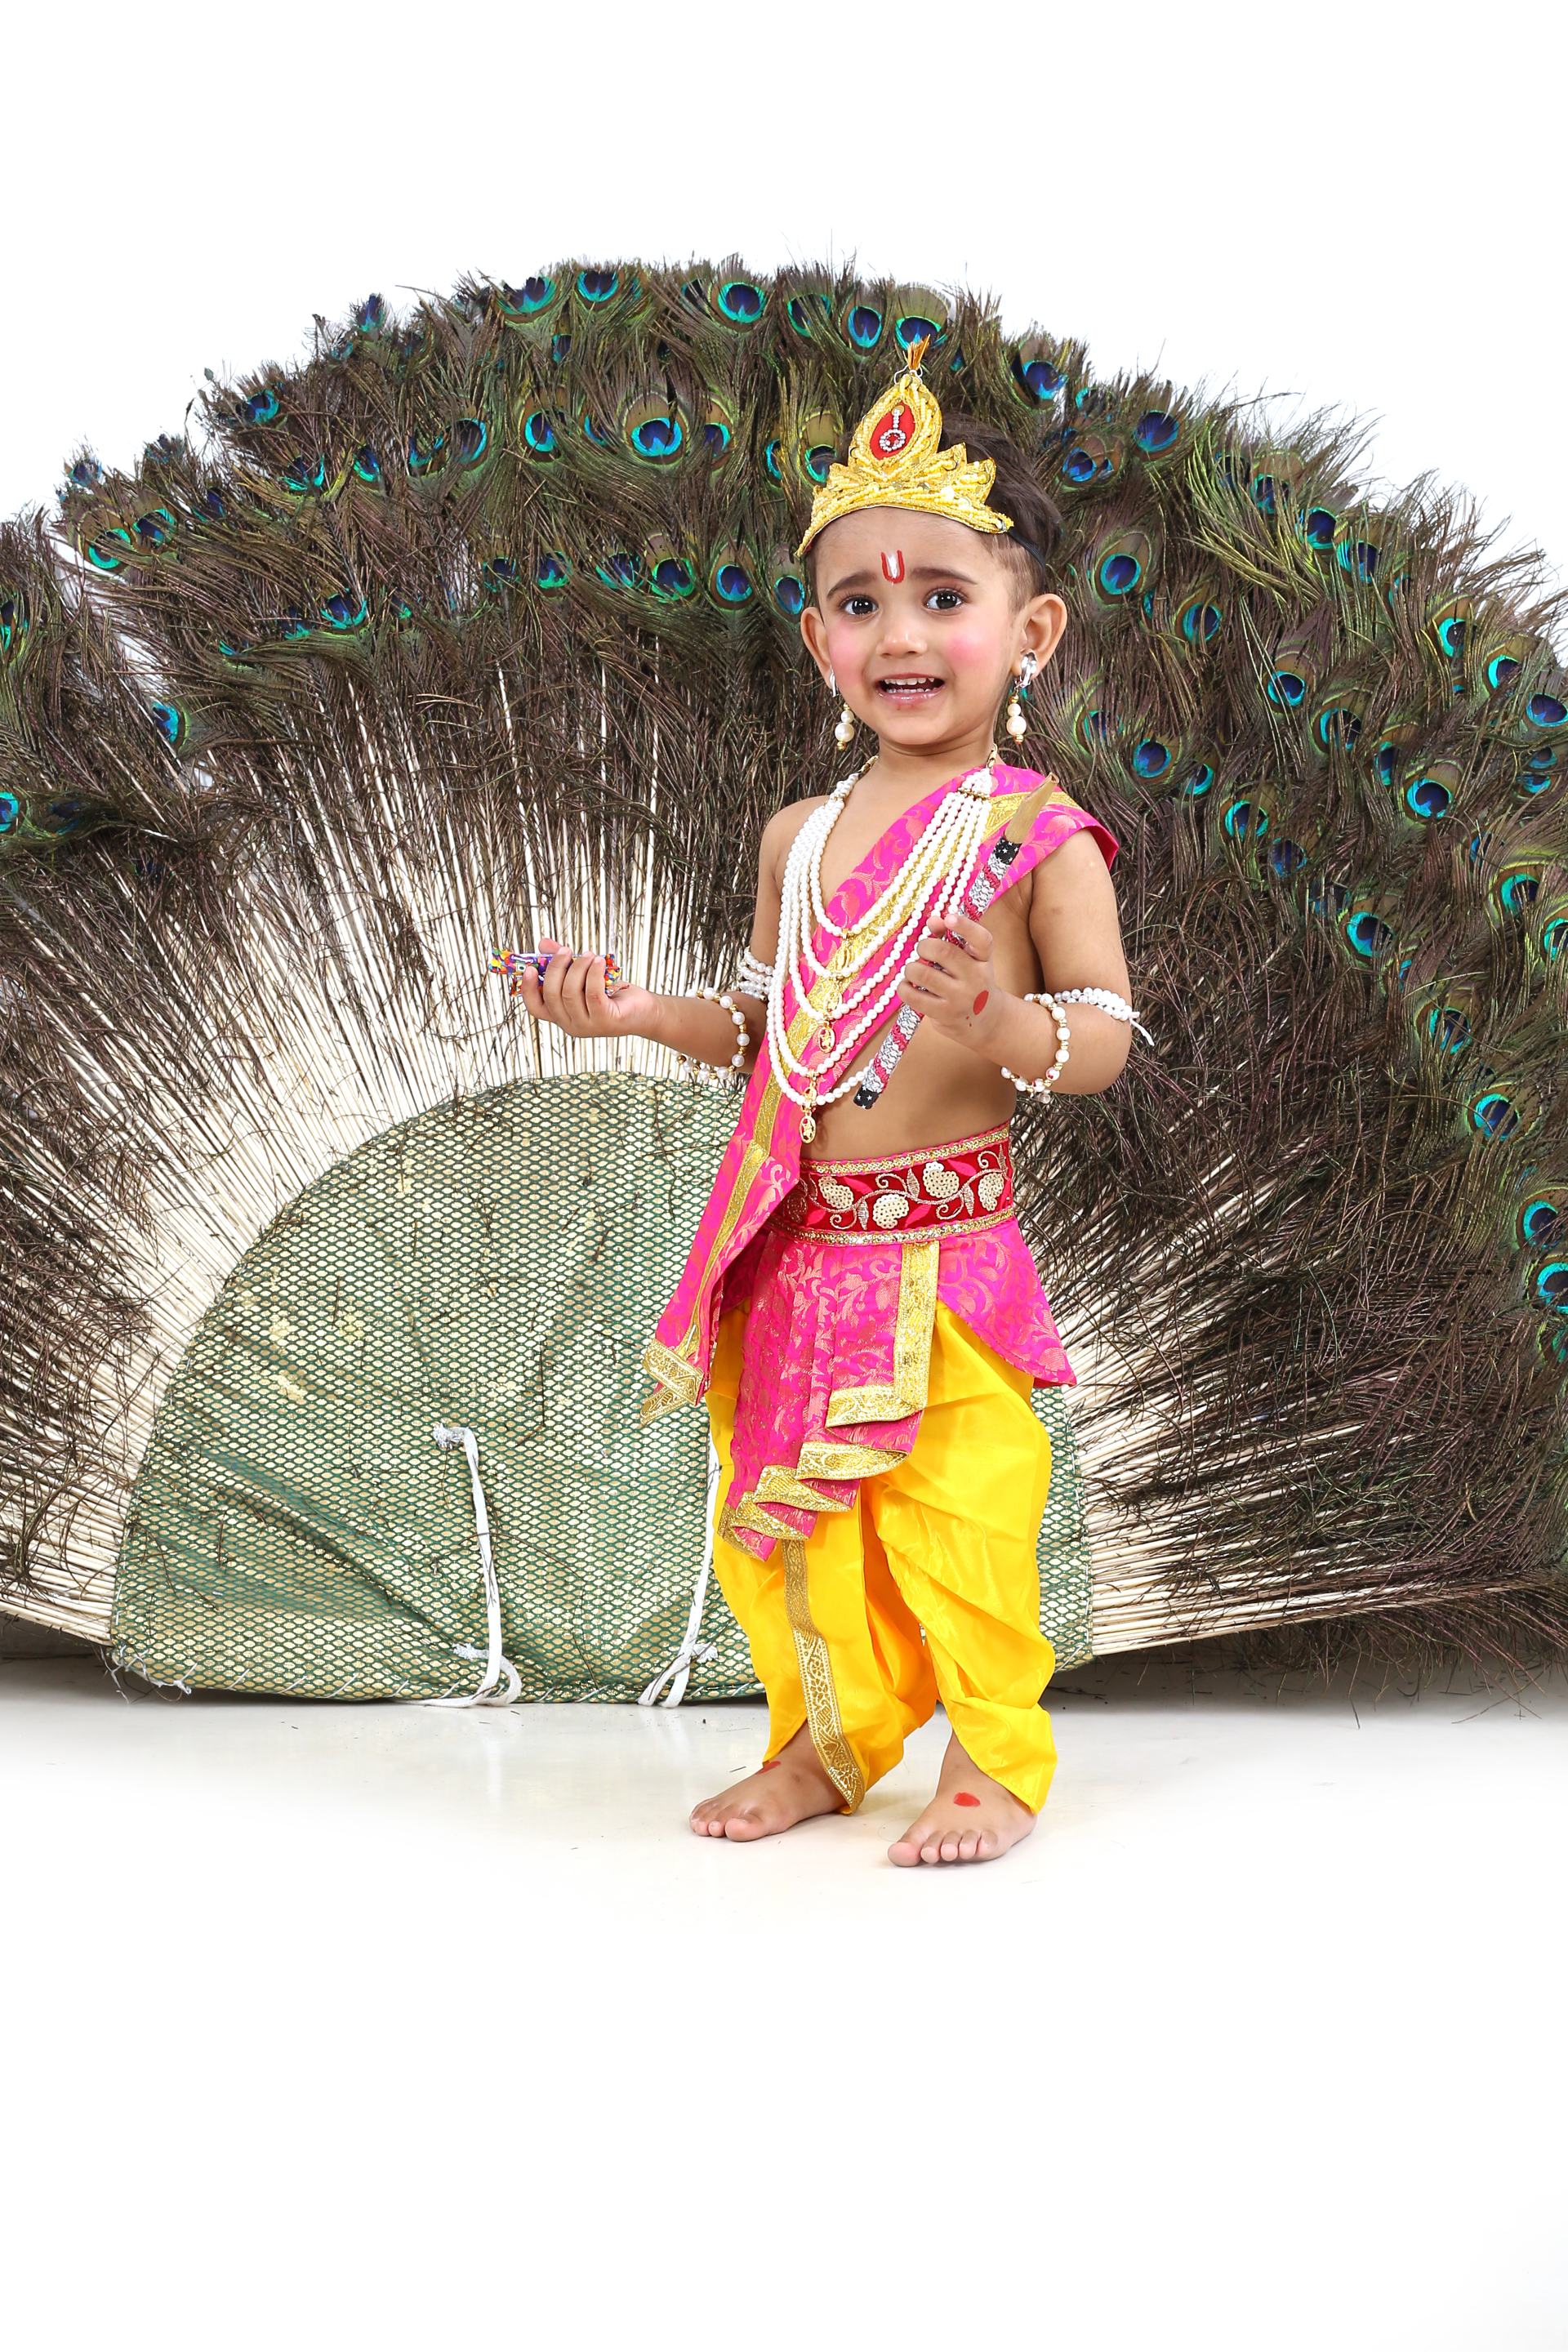 Raj Fancy Dresses Krishna Dress for Kids, Baby Krishna Dress for  Janmashtami with Krishna Mukut, Peacock Feather & Flute Embroidered Krishna  Costume for Girl & Boy, 3 Months Basic-Saksham : Amazon.in: Clothing